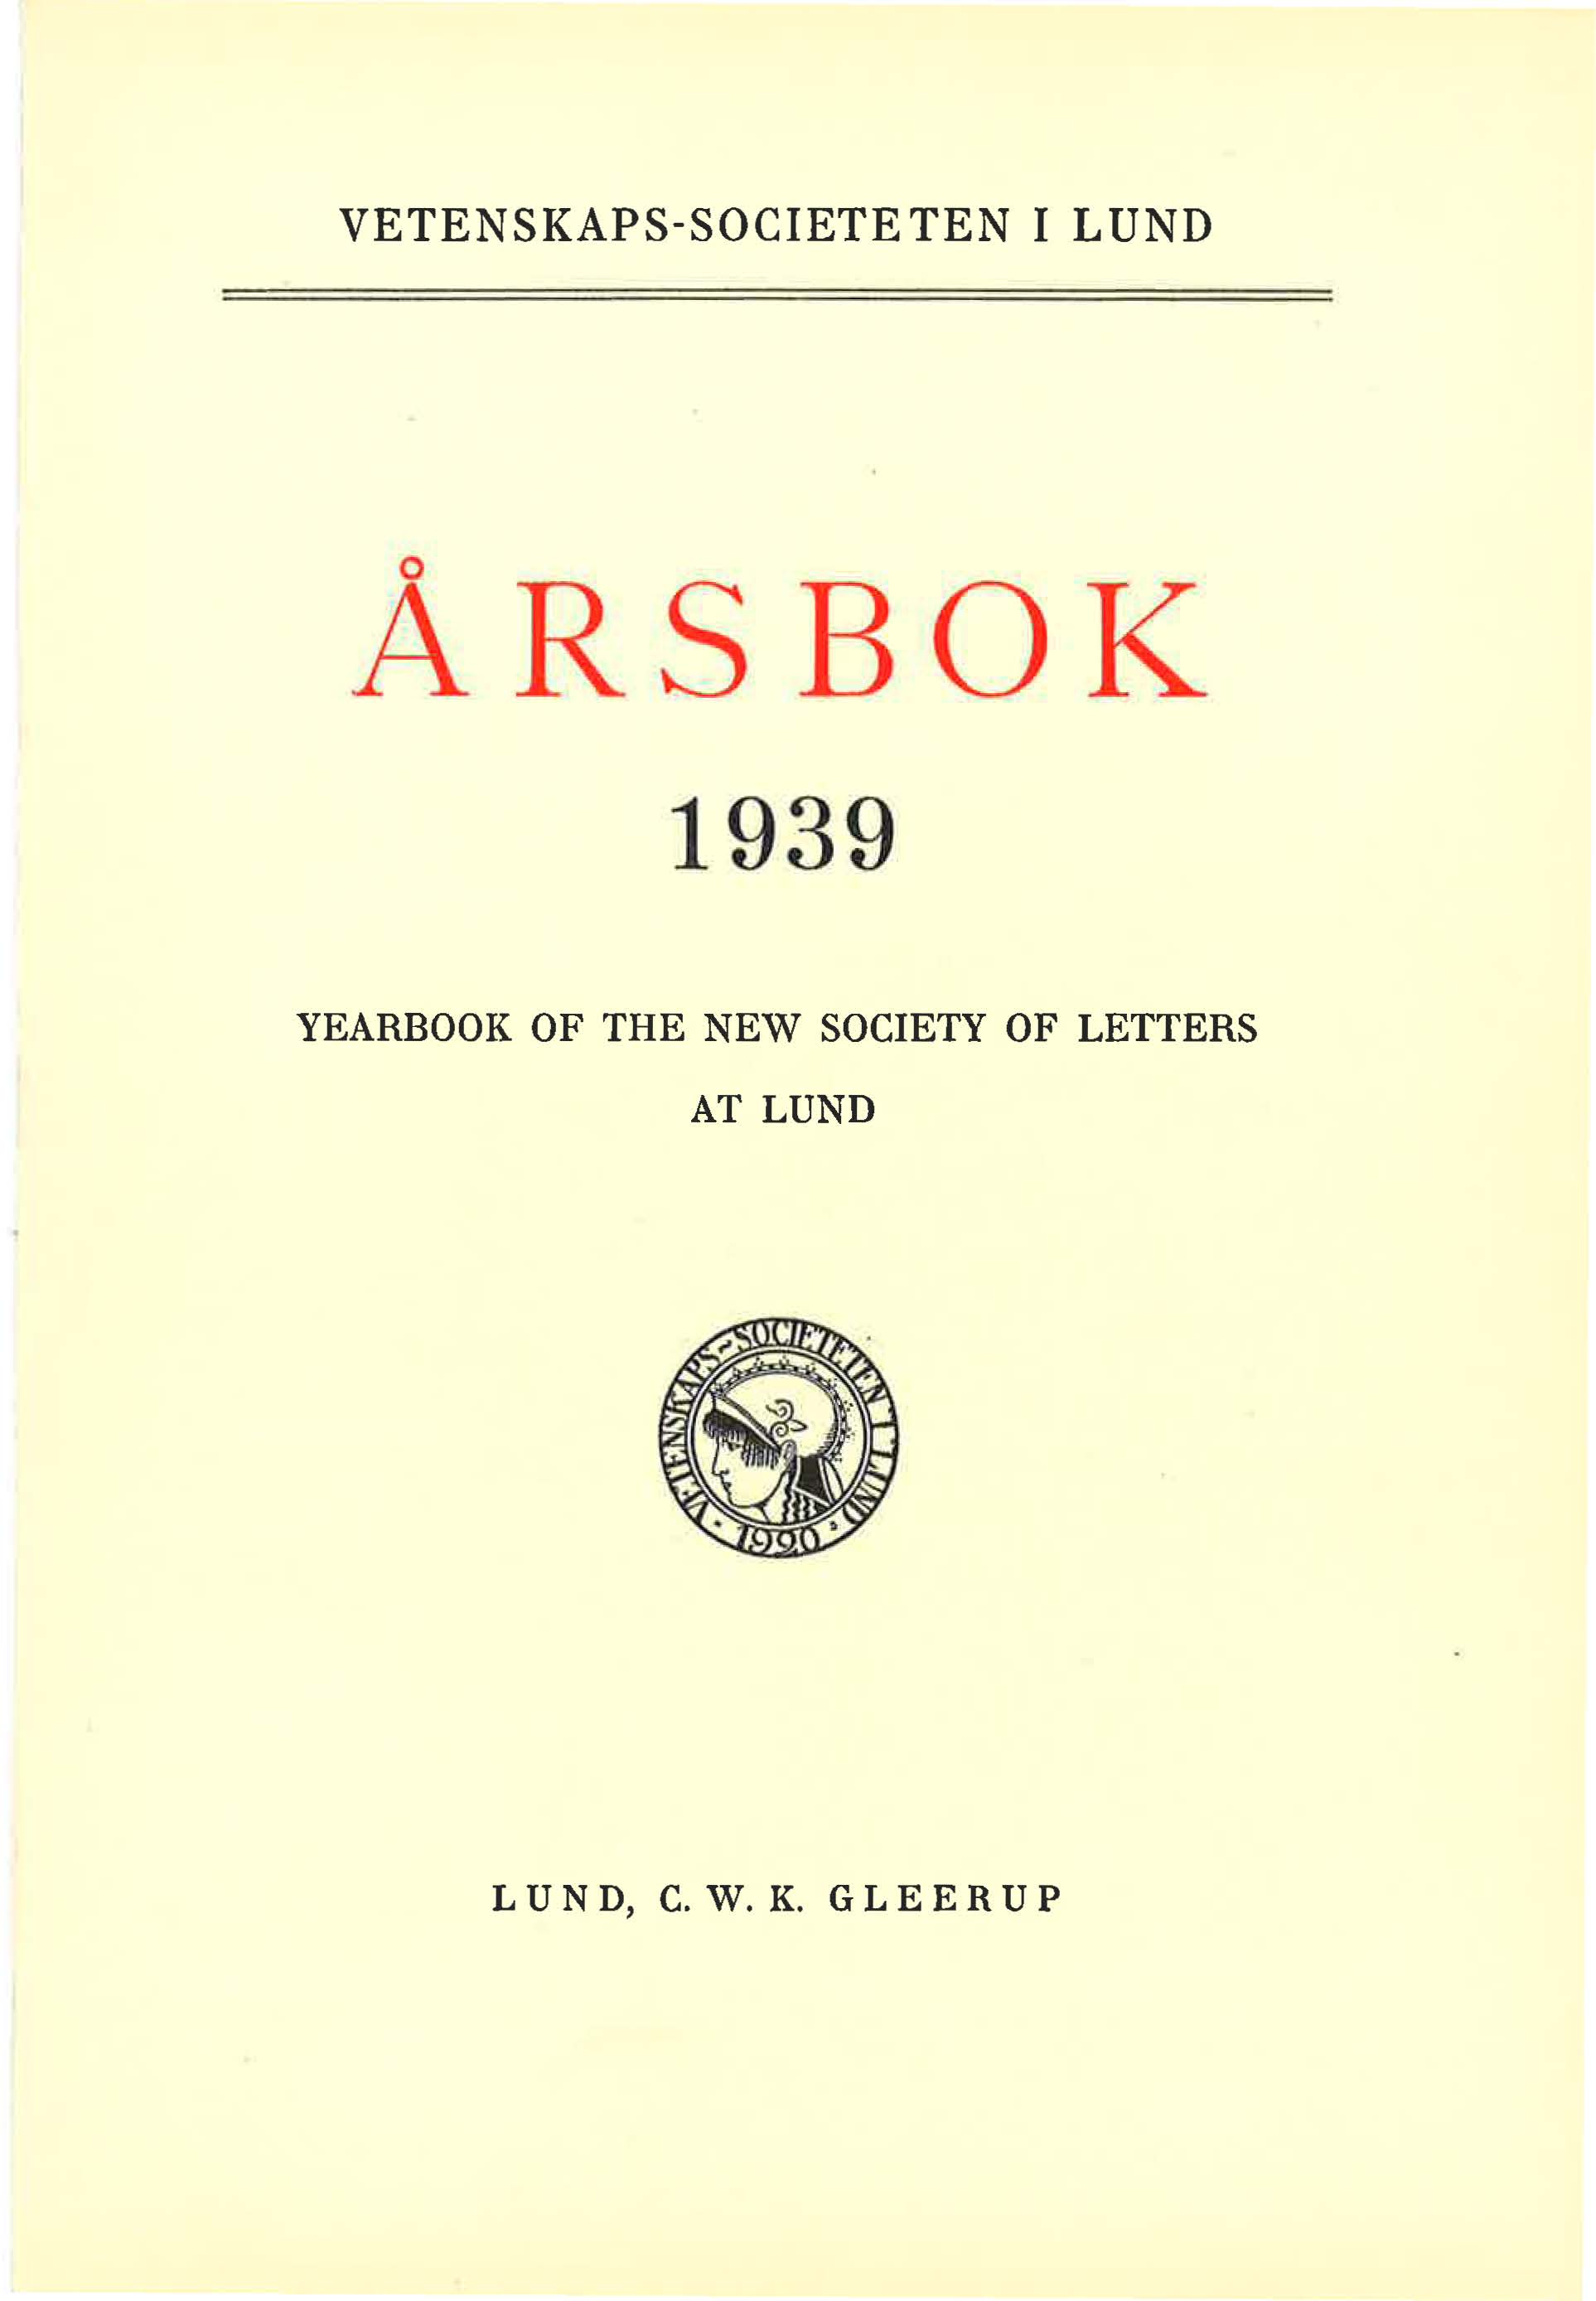 					Visa Årsbok 1939
				